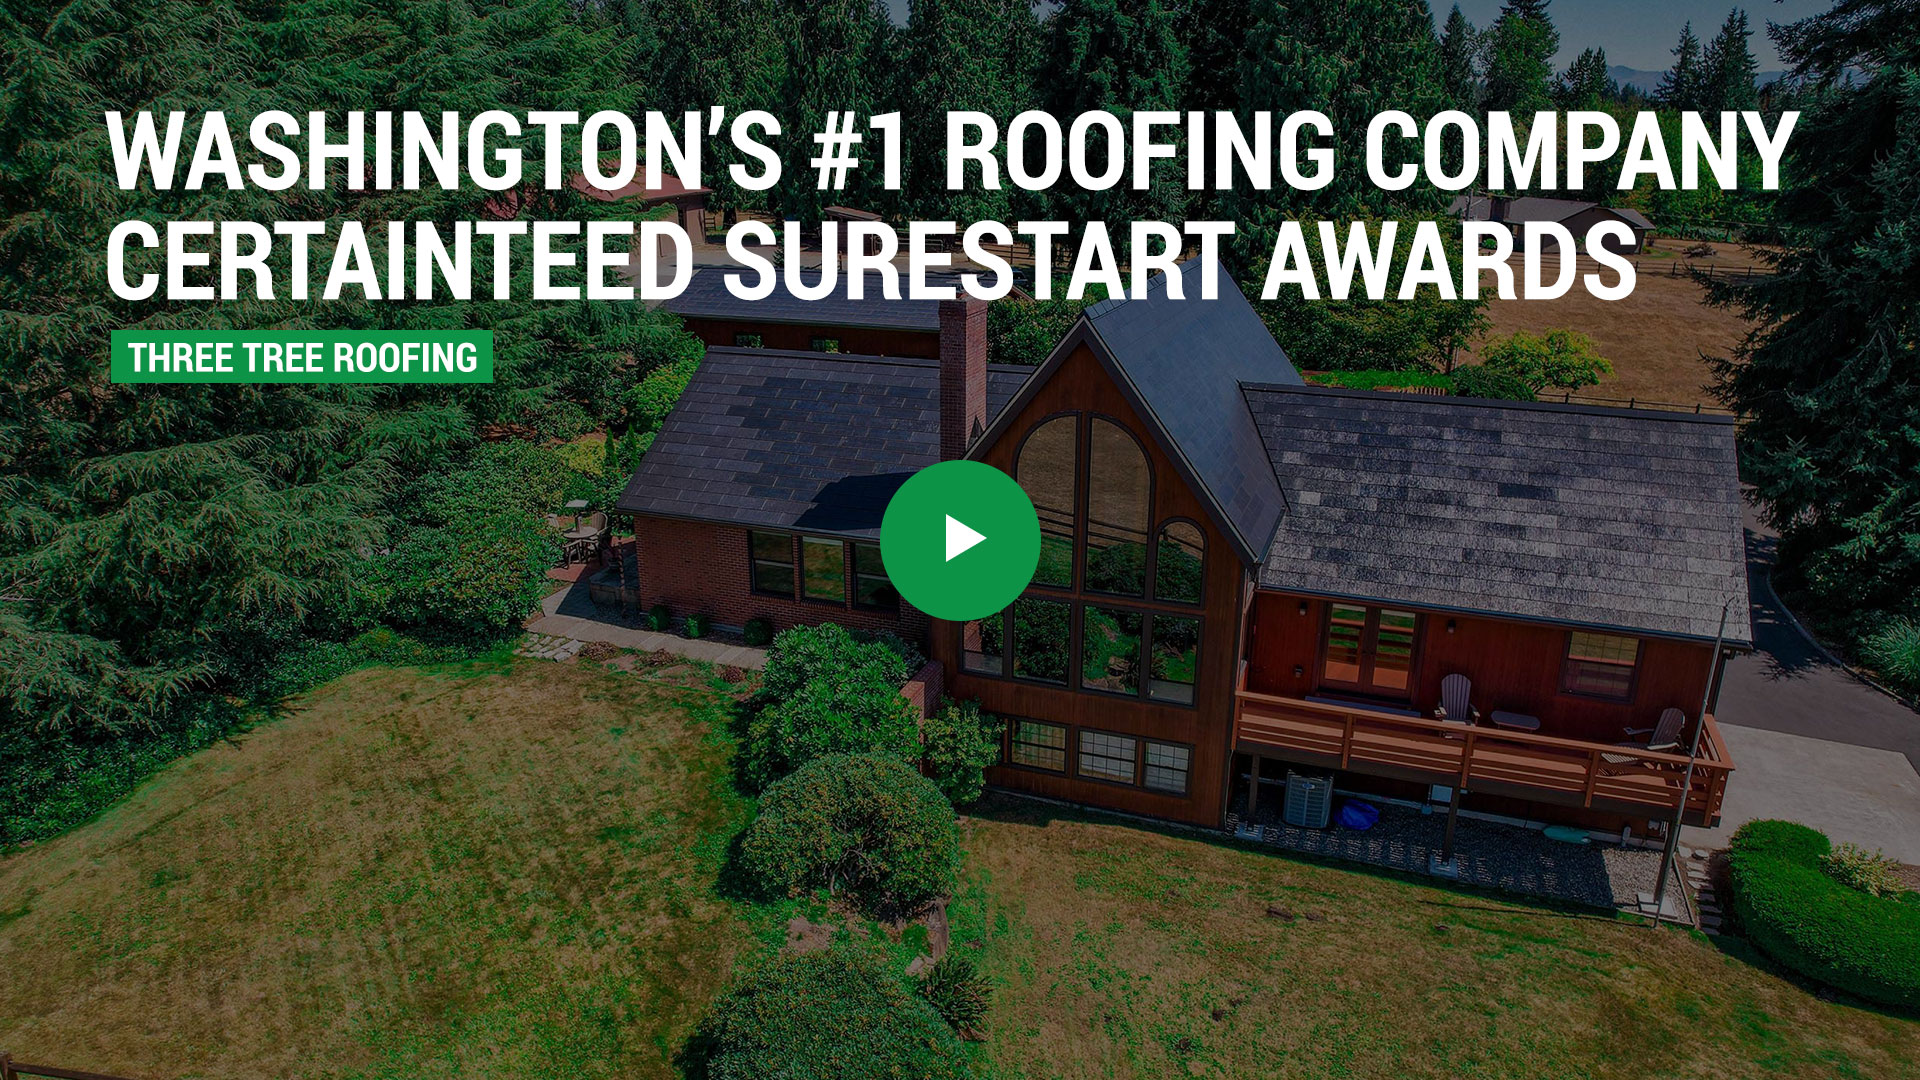 Number 1 Roofer in Washington! Earning Certainteed SureStart Awards - Roofing Video